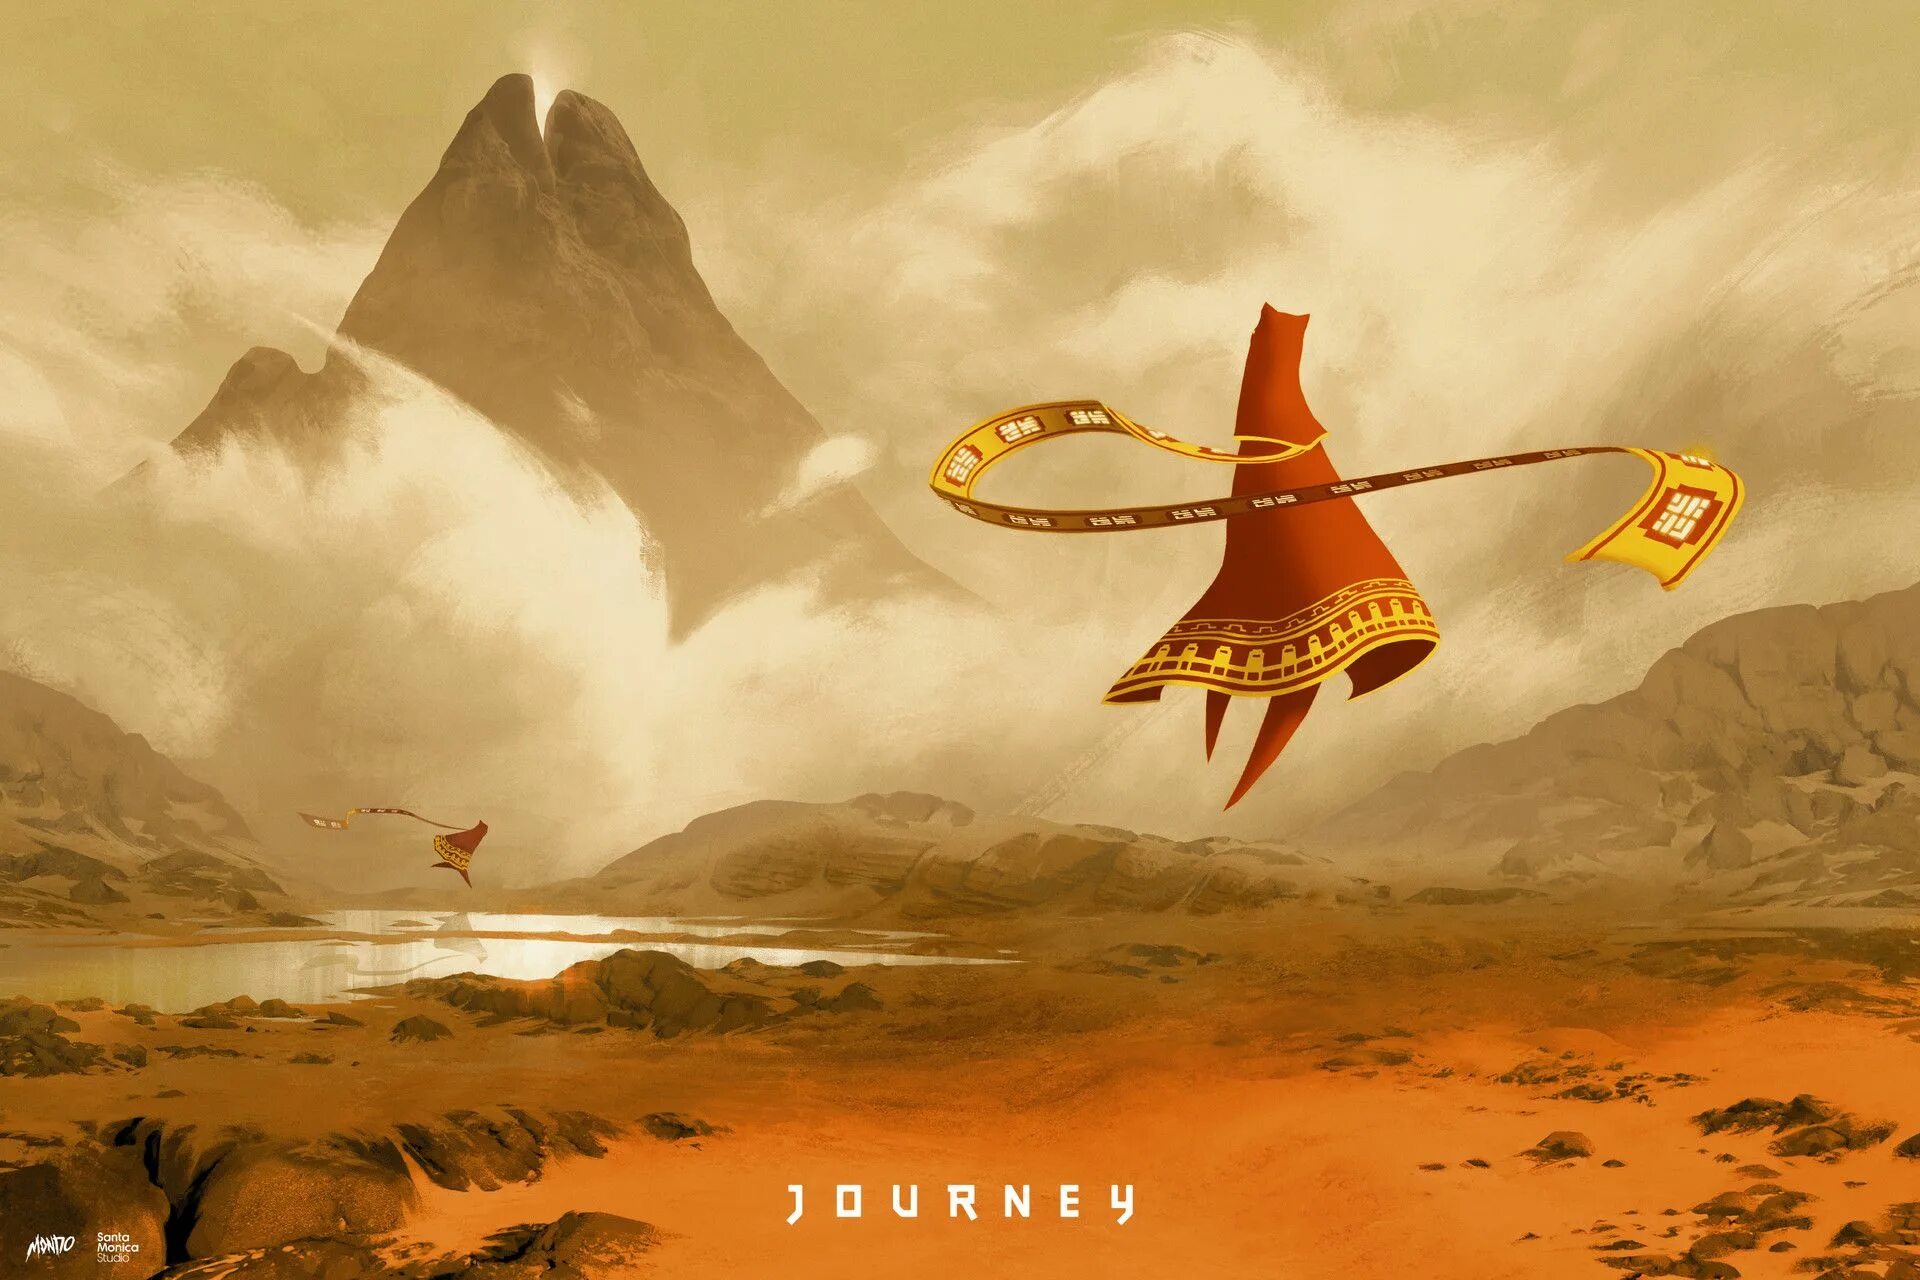 Tales journey. Journey (игра, 2012). Джорни путешествие игра. Tomislav Jagnjic. Journey концепт арт.